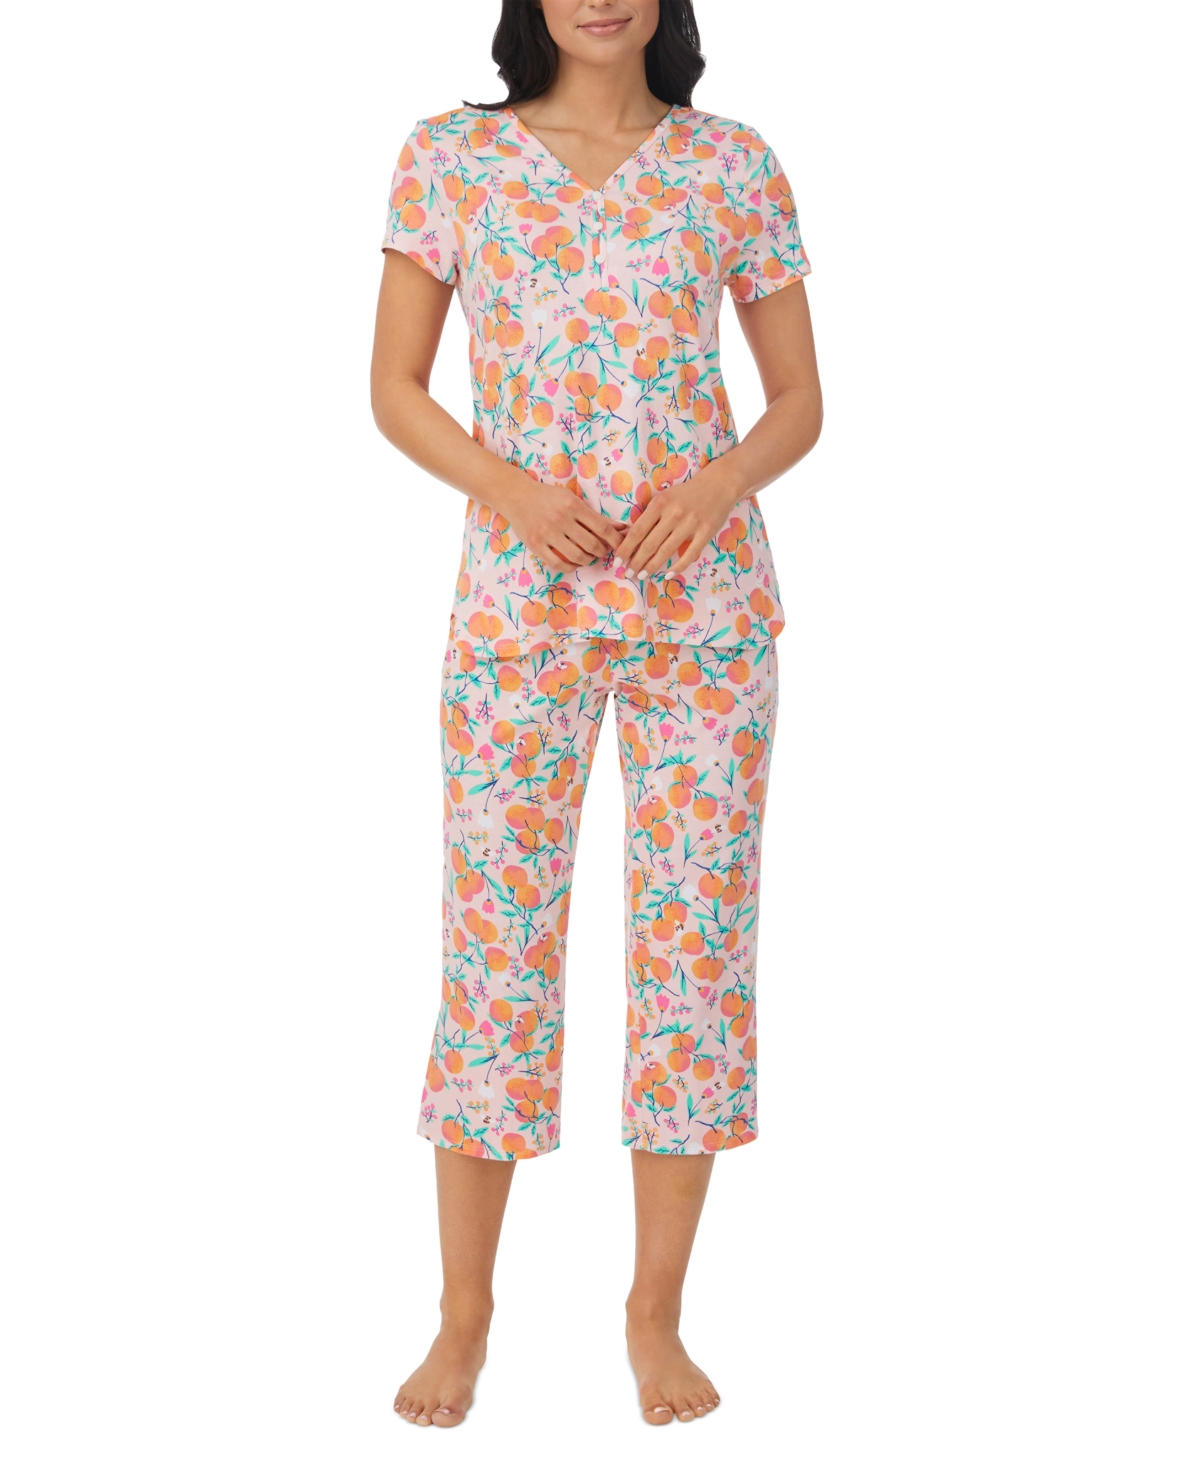 Cuddl Duds Women's Short-Sleeved Top & Capri Pants Pajama Set